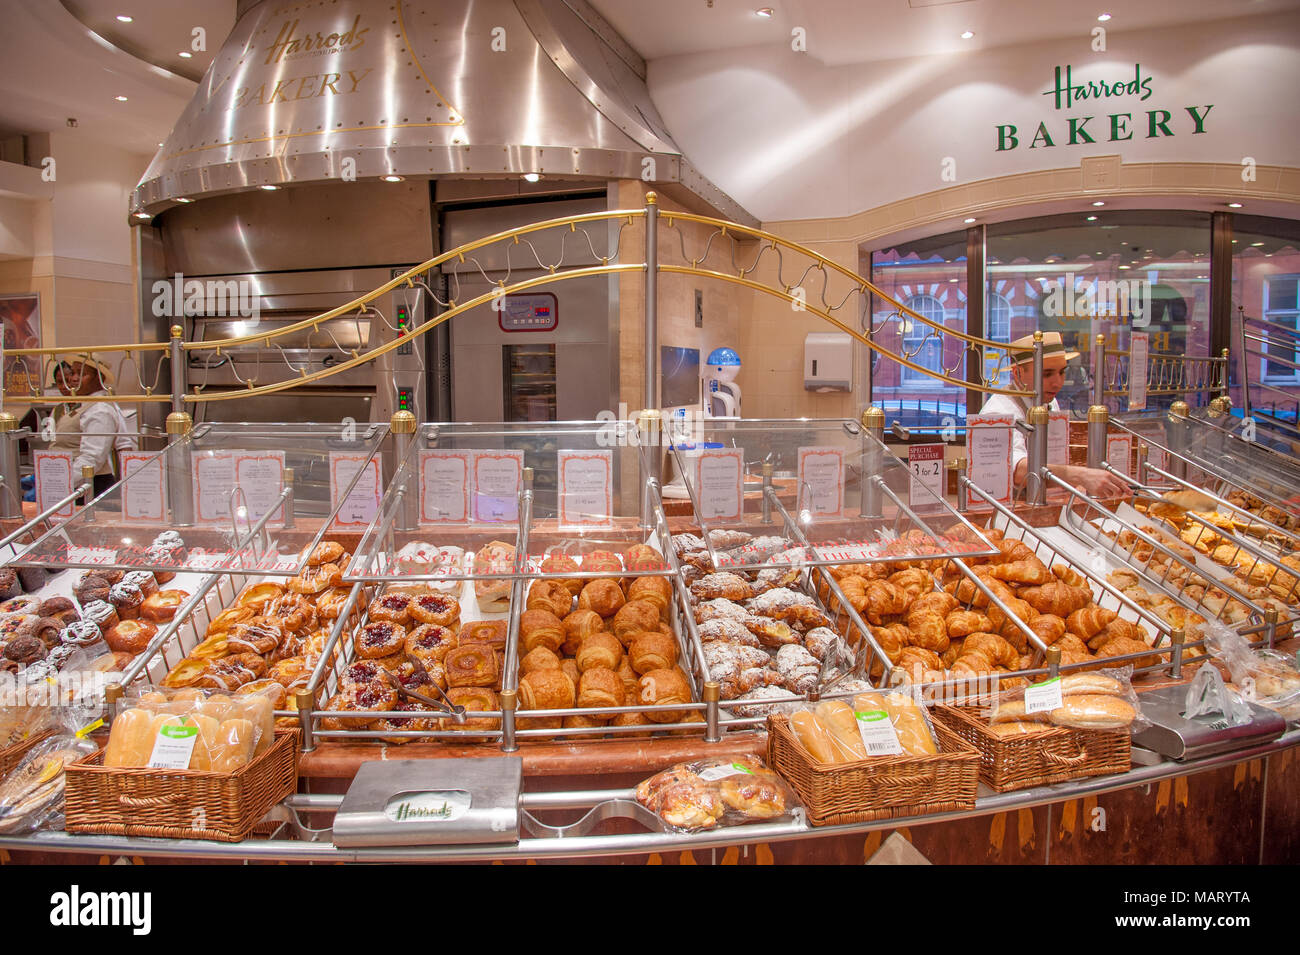 Harrods bakery counter, London, UK Stock Photo